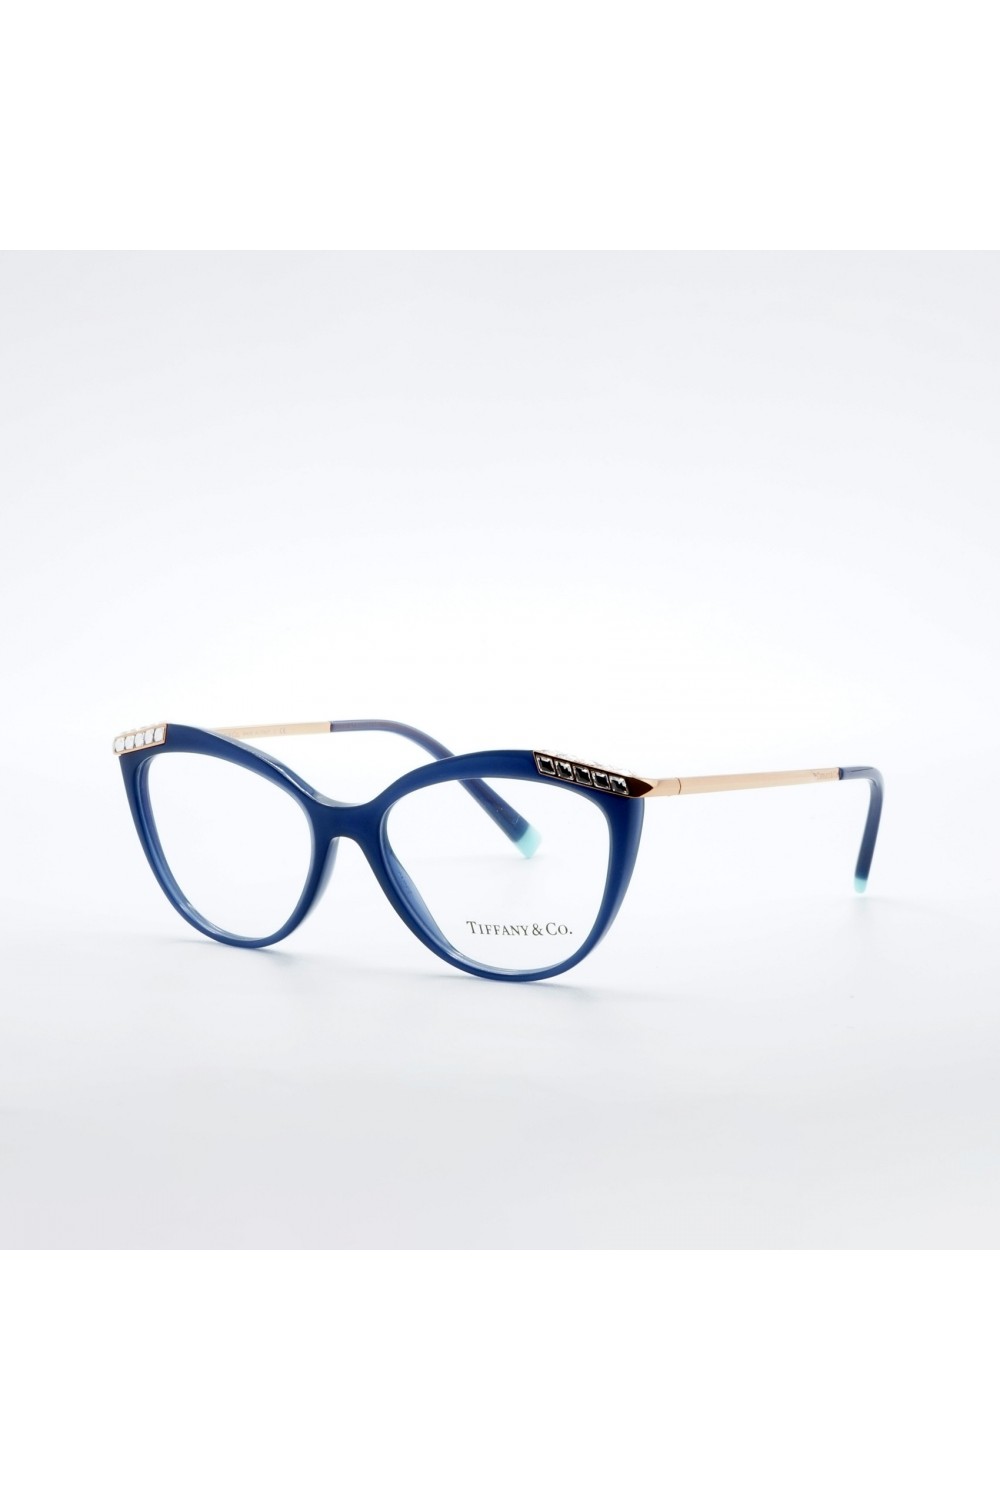 Tiffany & Co. - Occhiali da vista in celluloide cat eye per donna blu - TF2198